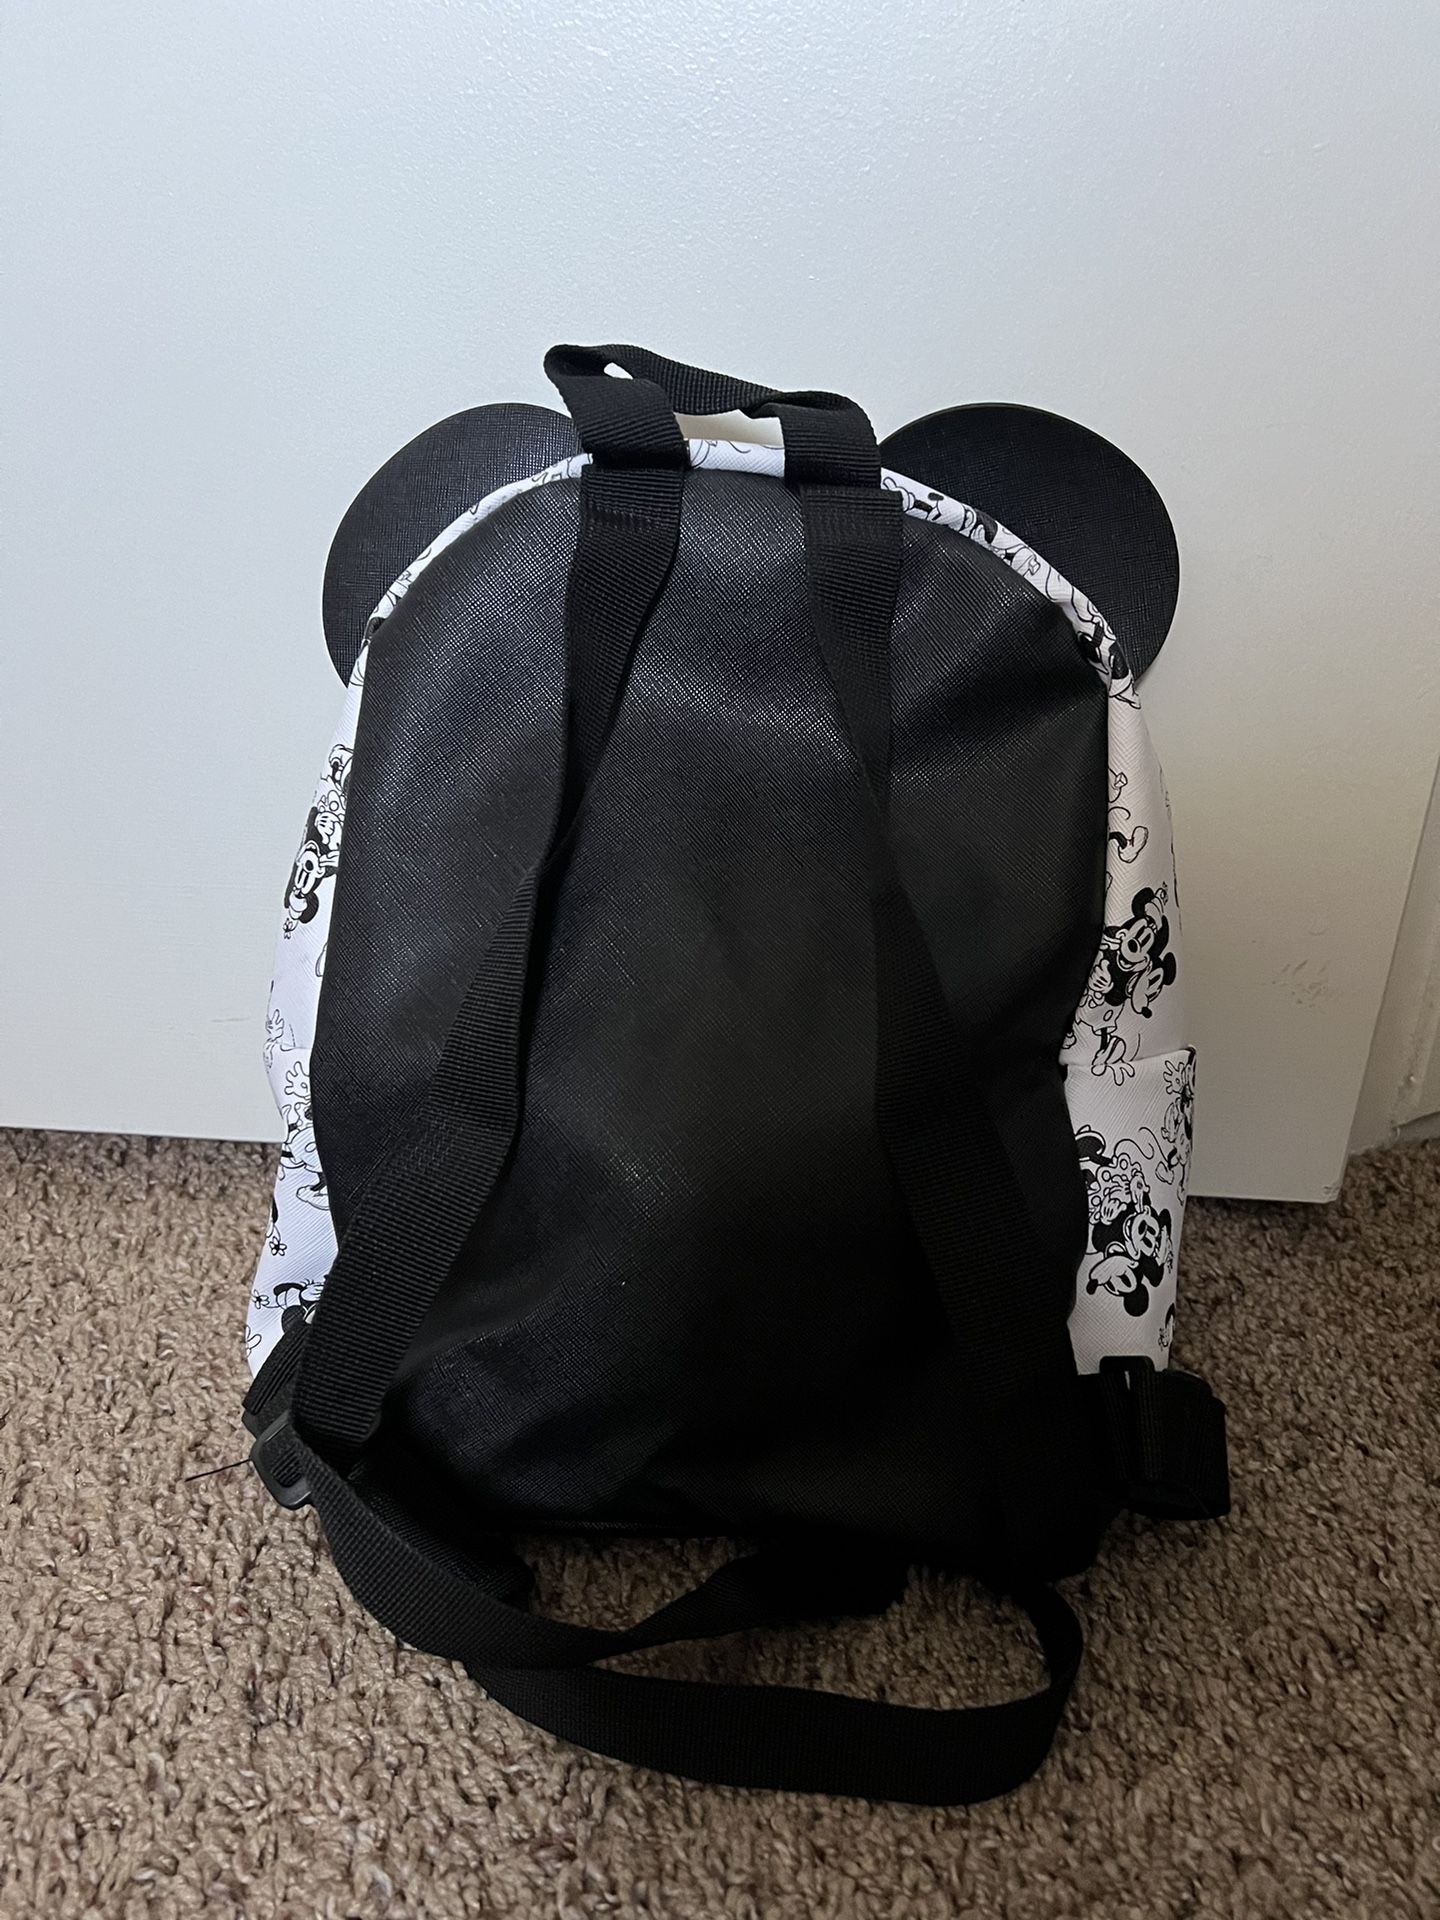 Purse/backpack